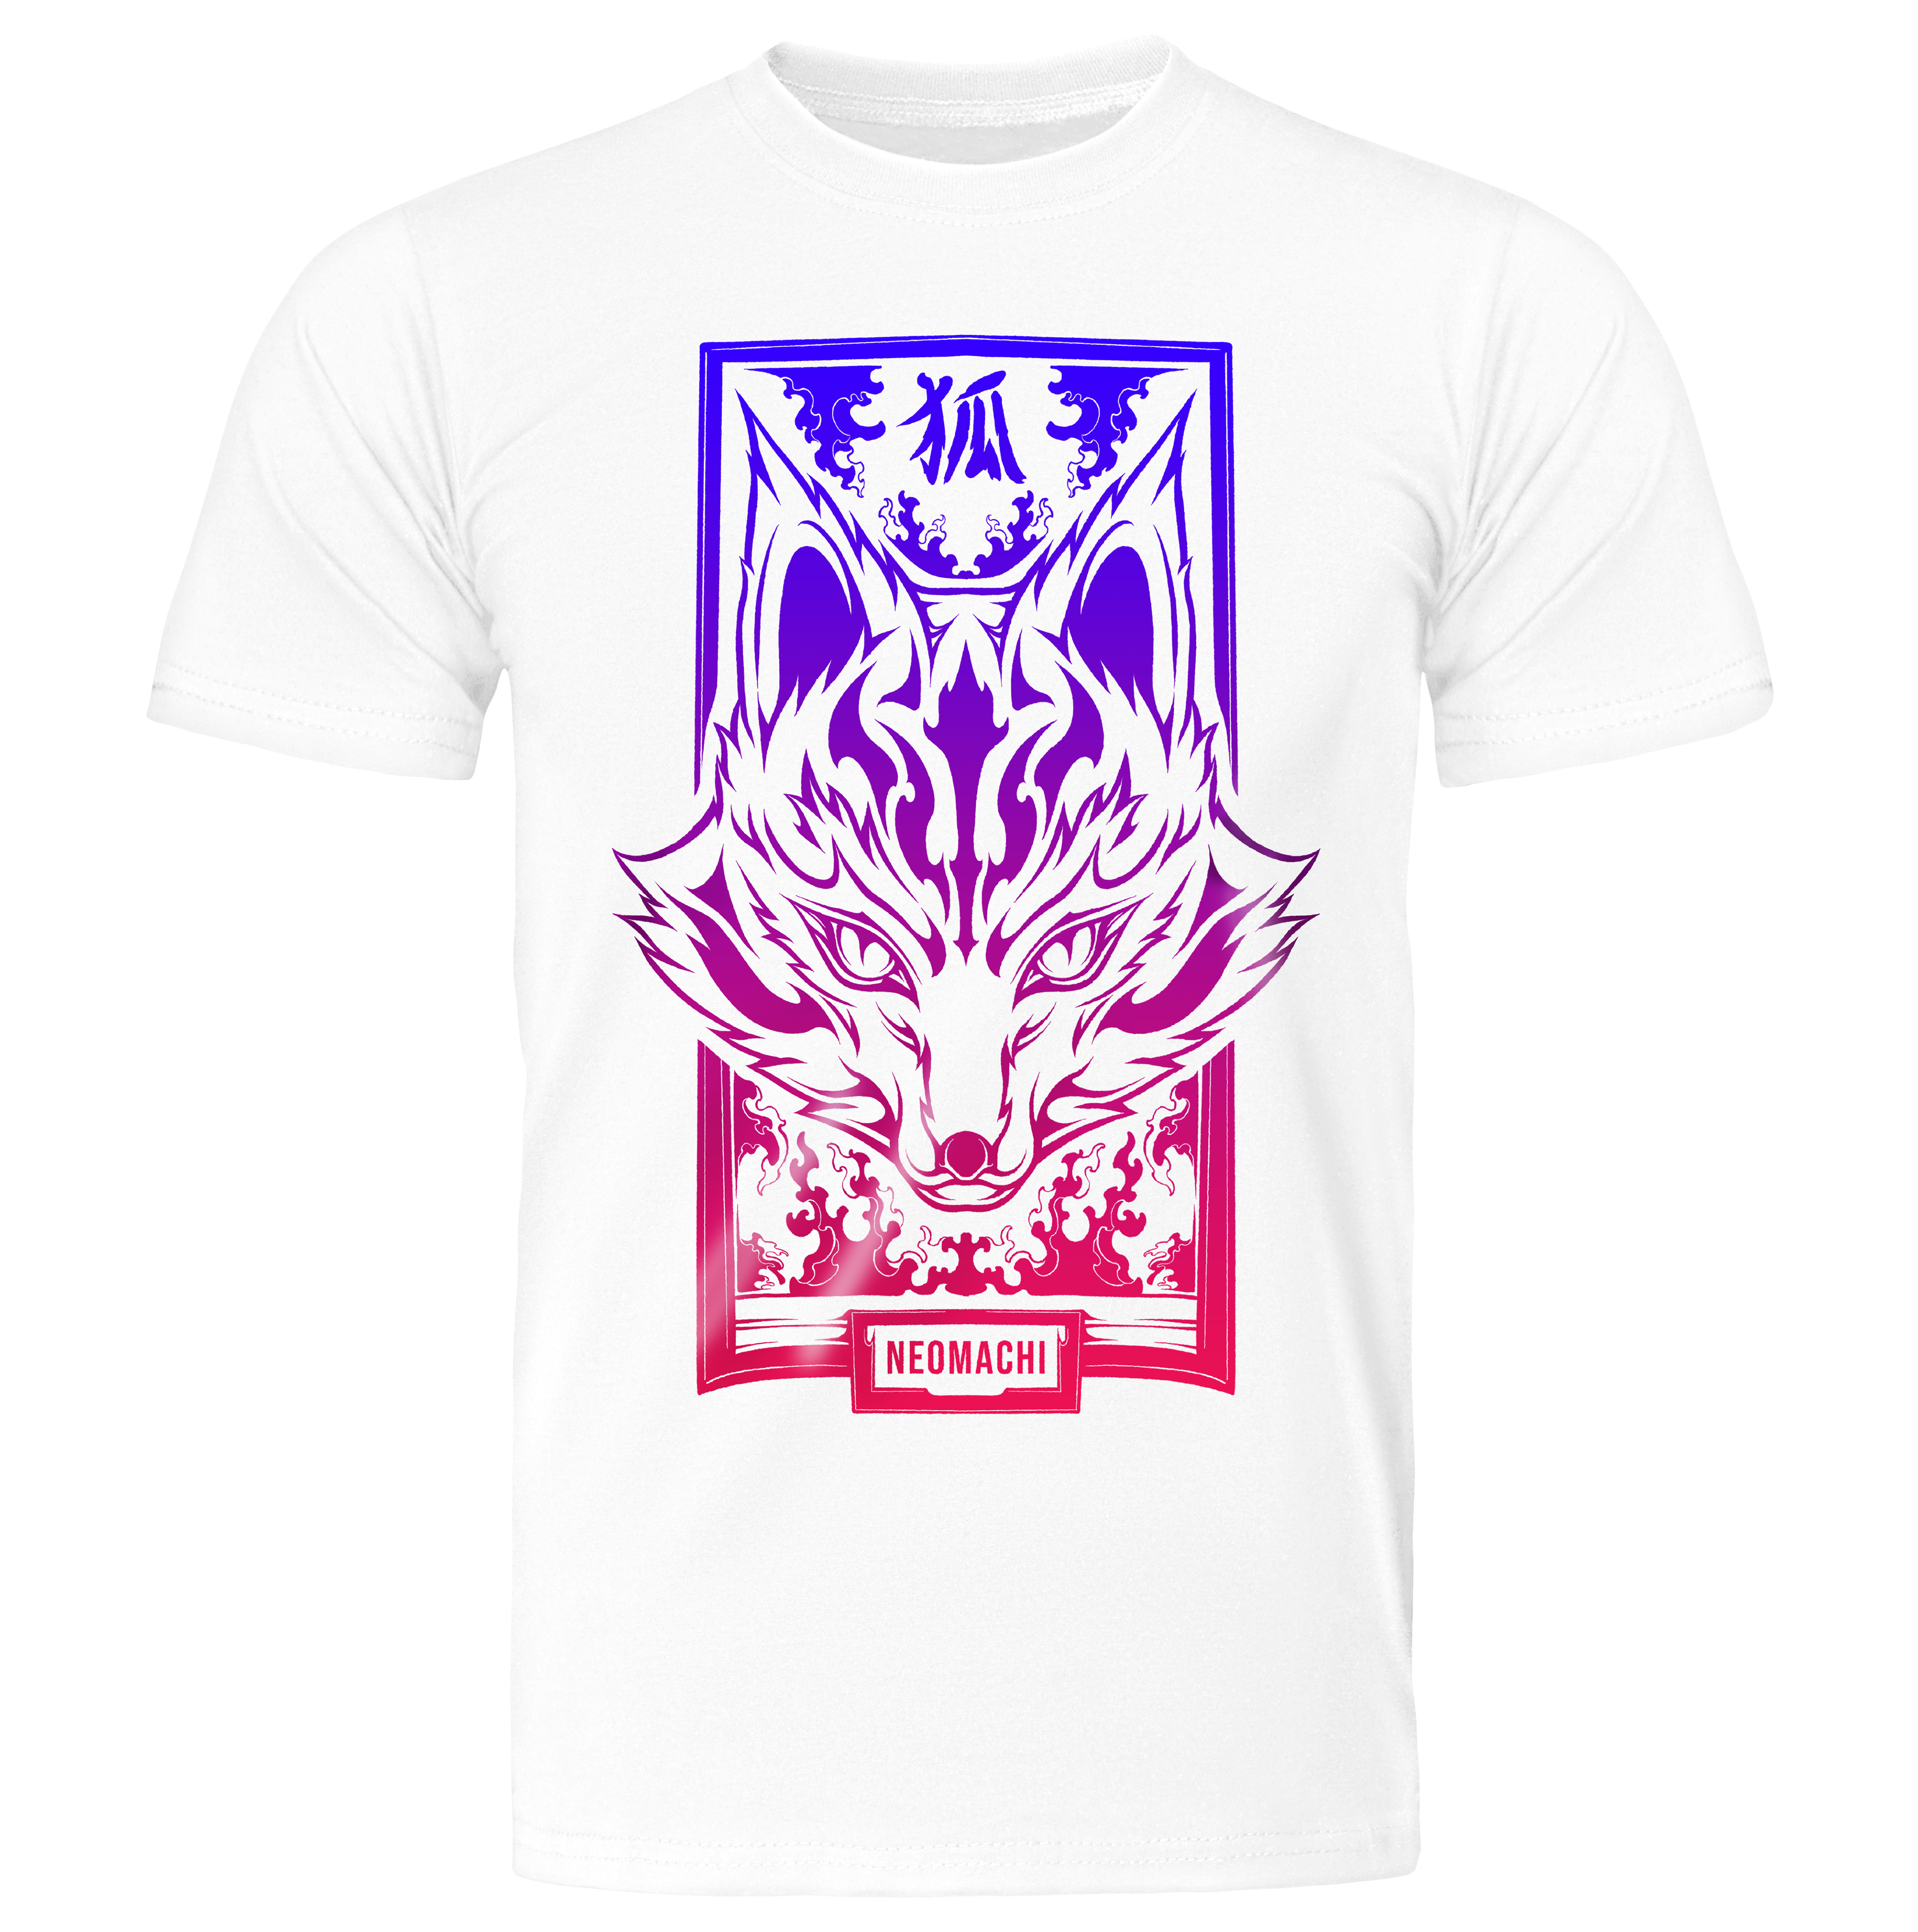 ZENKO: T-SHIRT - White - Front - cyberpunk t-shirt - Neomachi